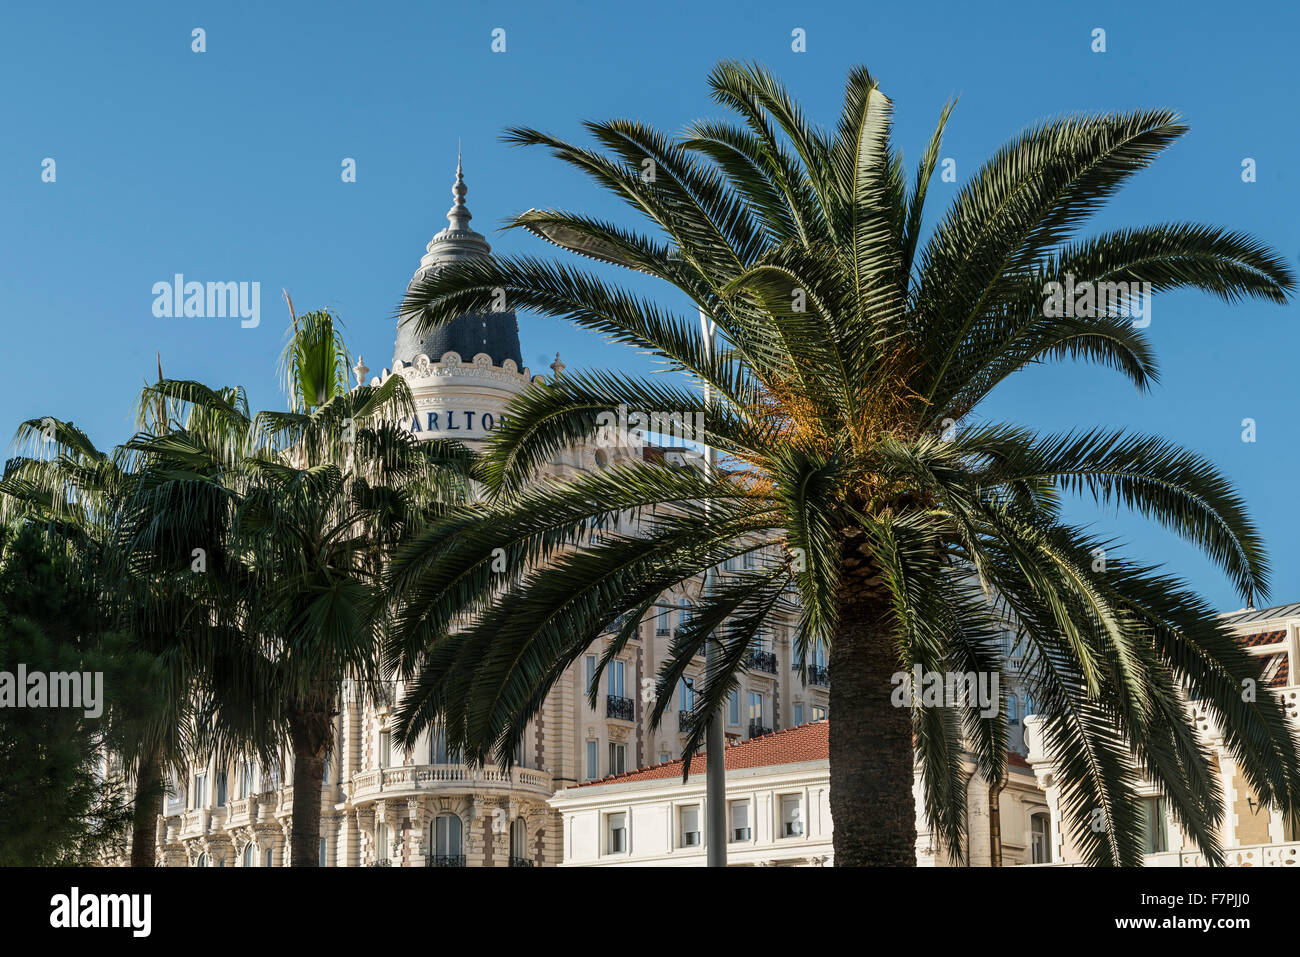 Carlton, Hotel, Facade, Palm tree, Cannes, Cote d'Azur, France, Stock Photo